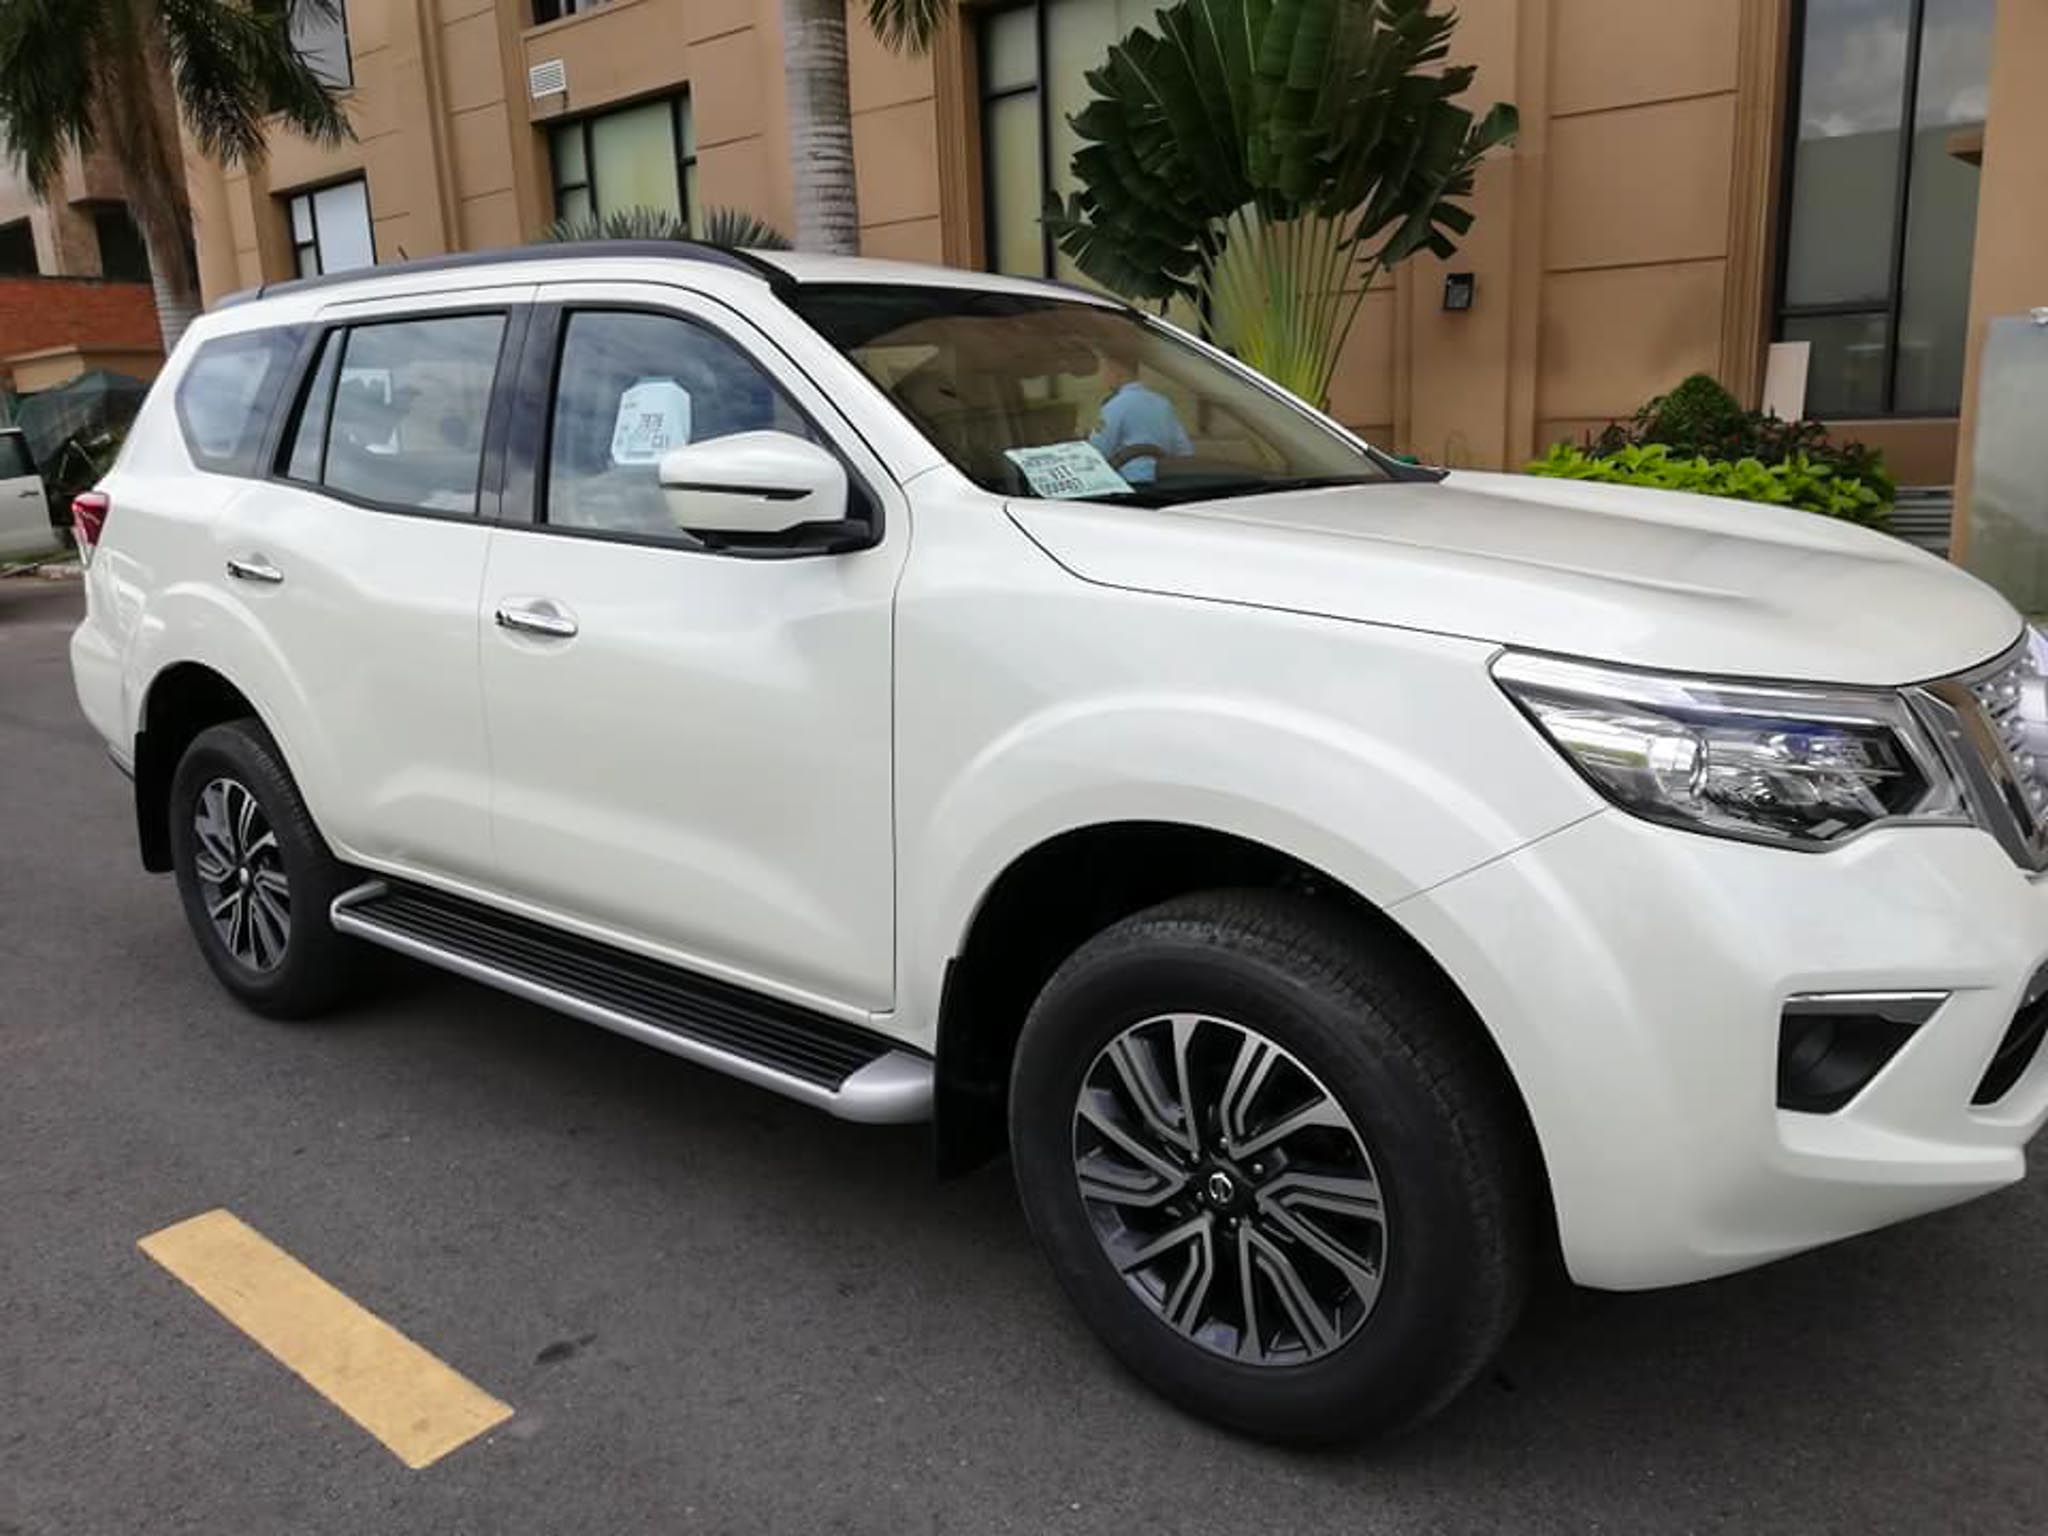 Nissan-Terra-2019-xuat-hien-tren-pho-Sai-gon